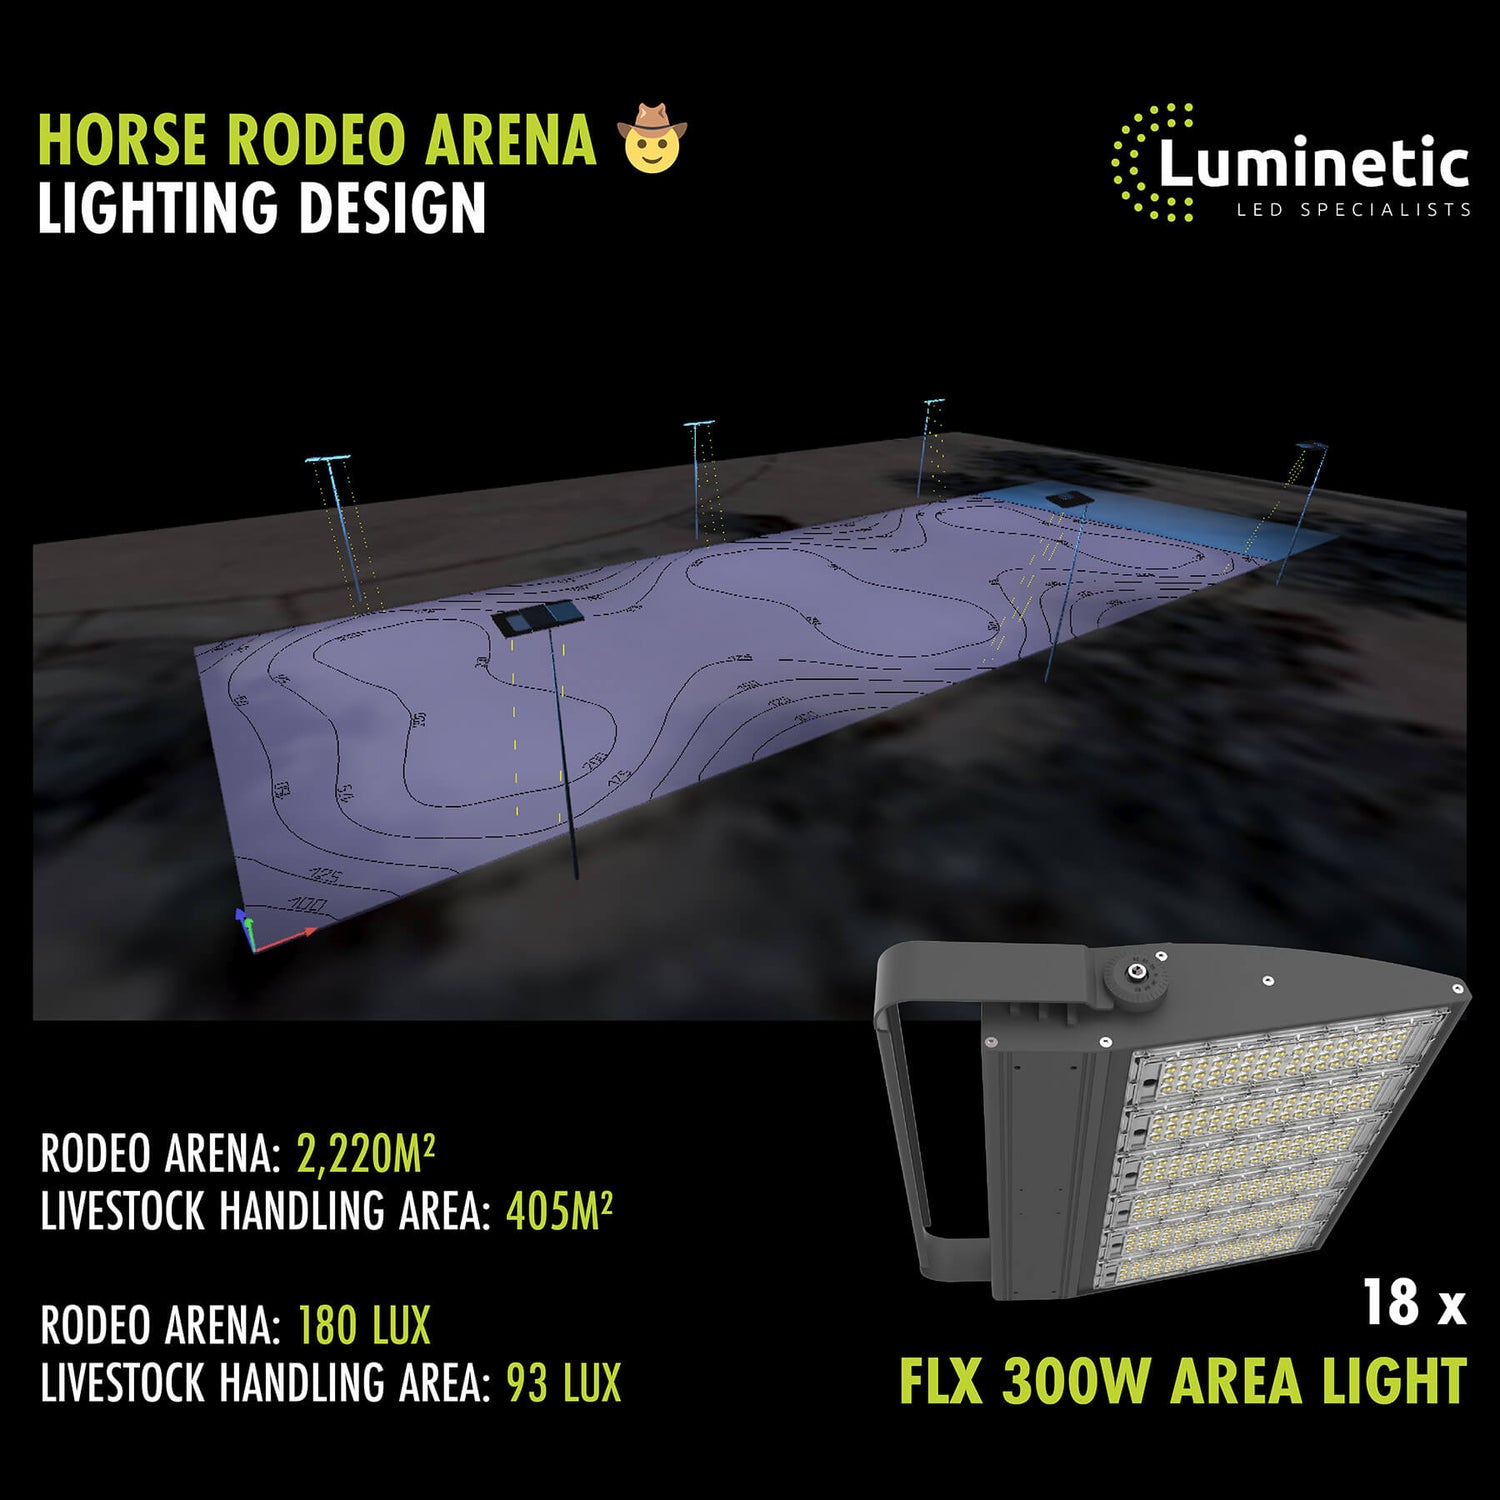 LED Lighting Design for Horse Rodeo Arena